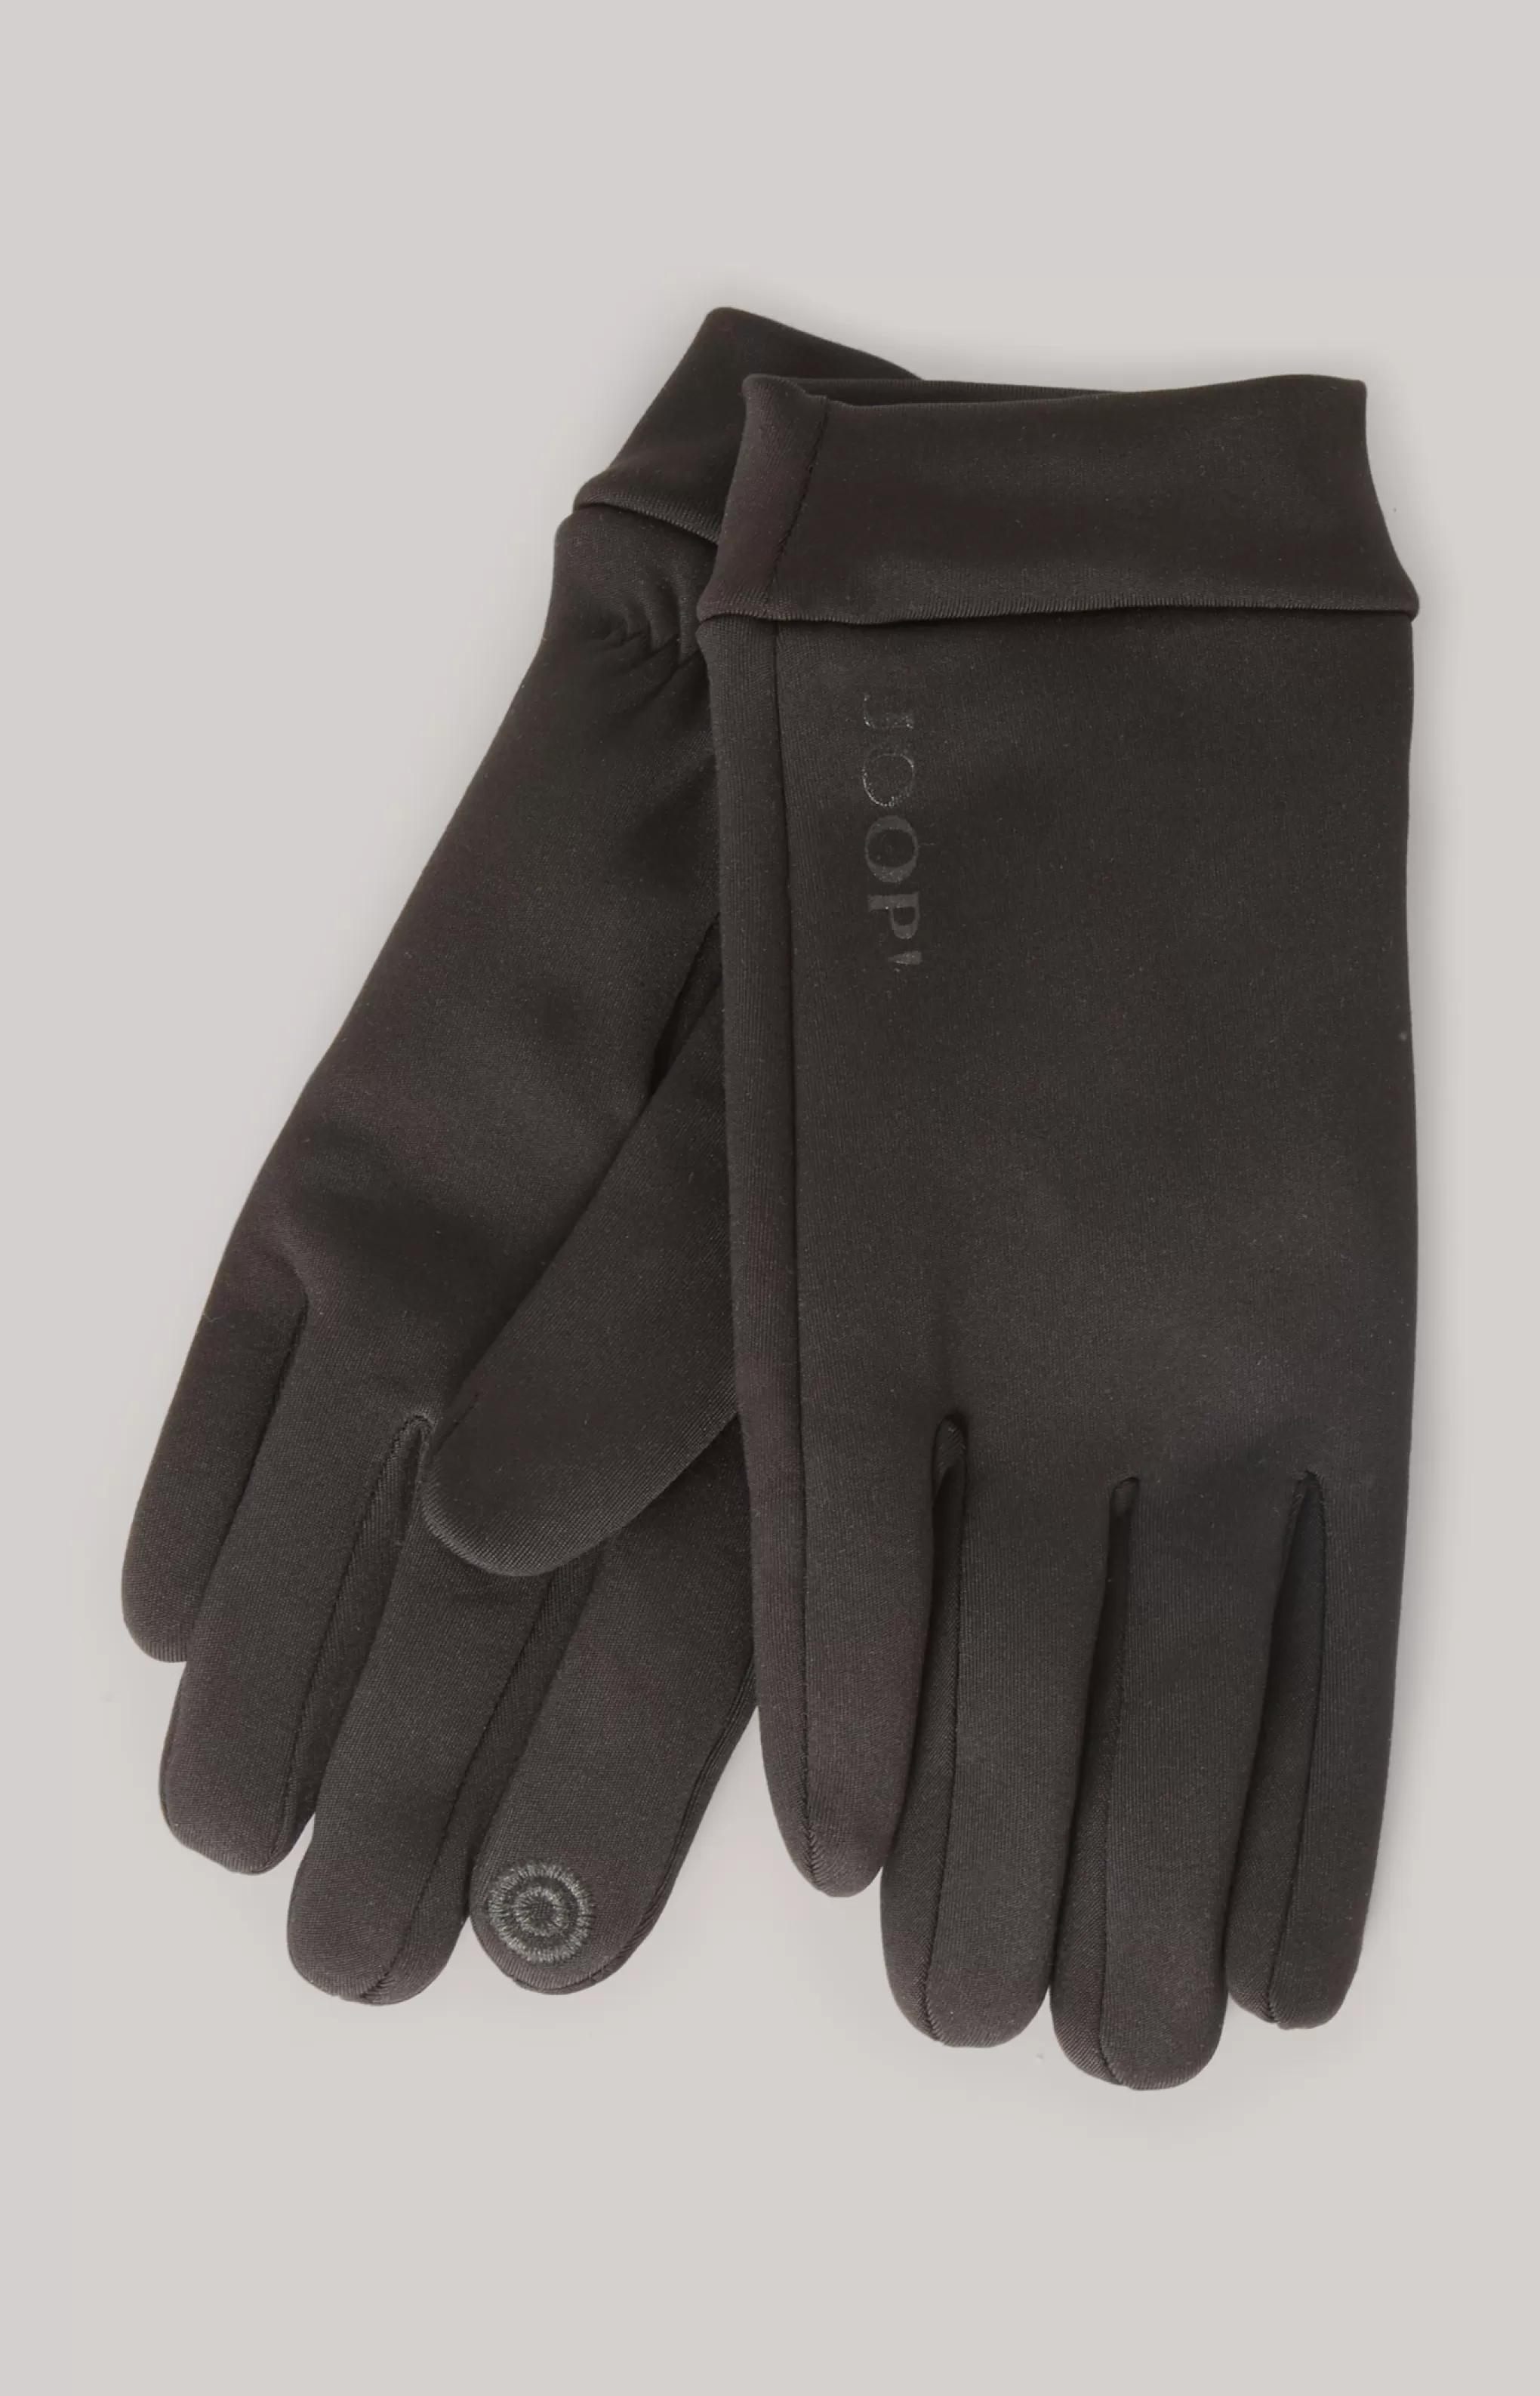 Gloves*JOOP Gloves Touchscreen Gloves in